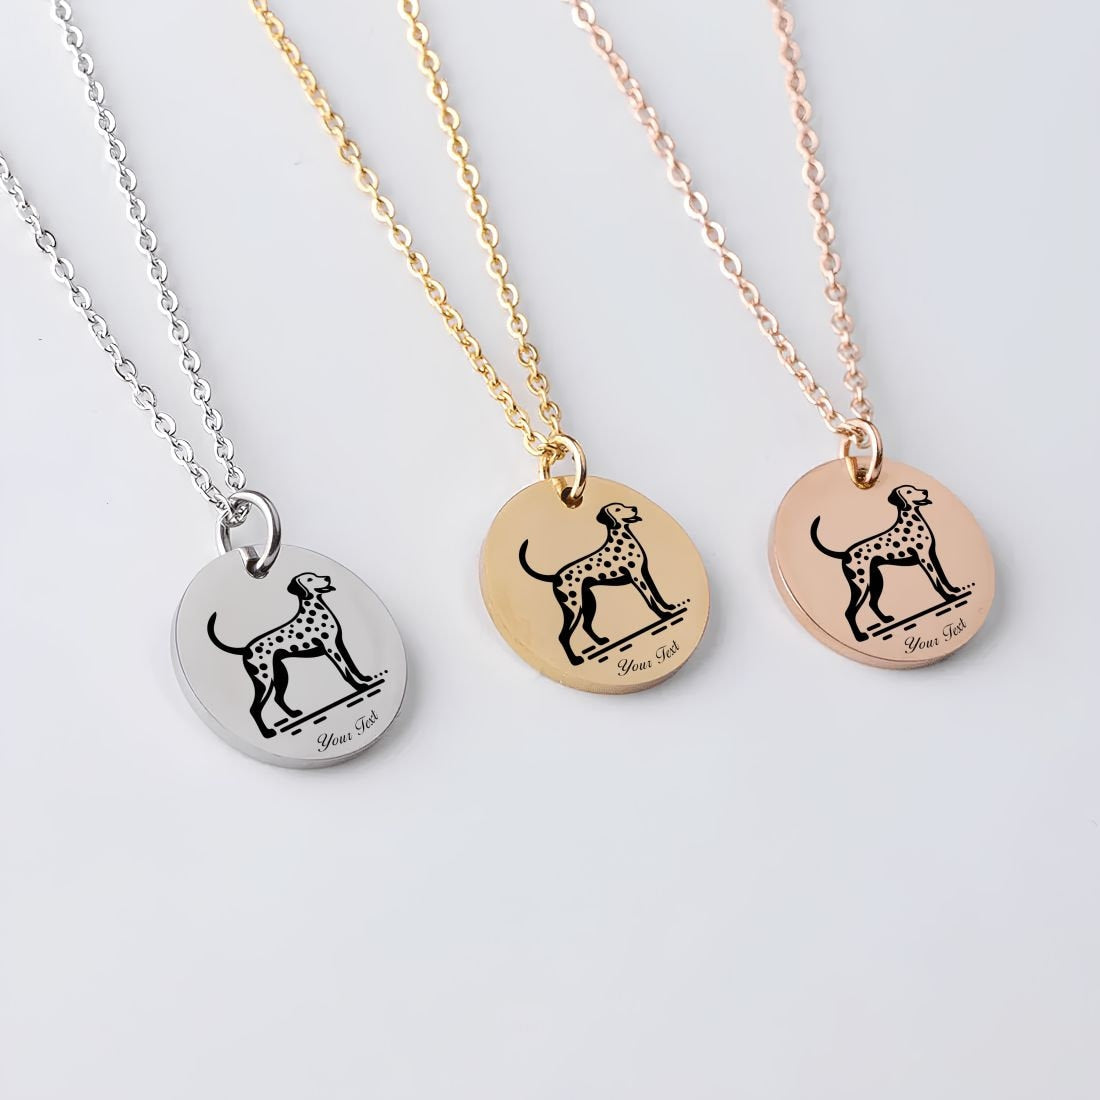 Dalmatian Dog Portrait Necklace - Personalizable Jewelry